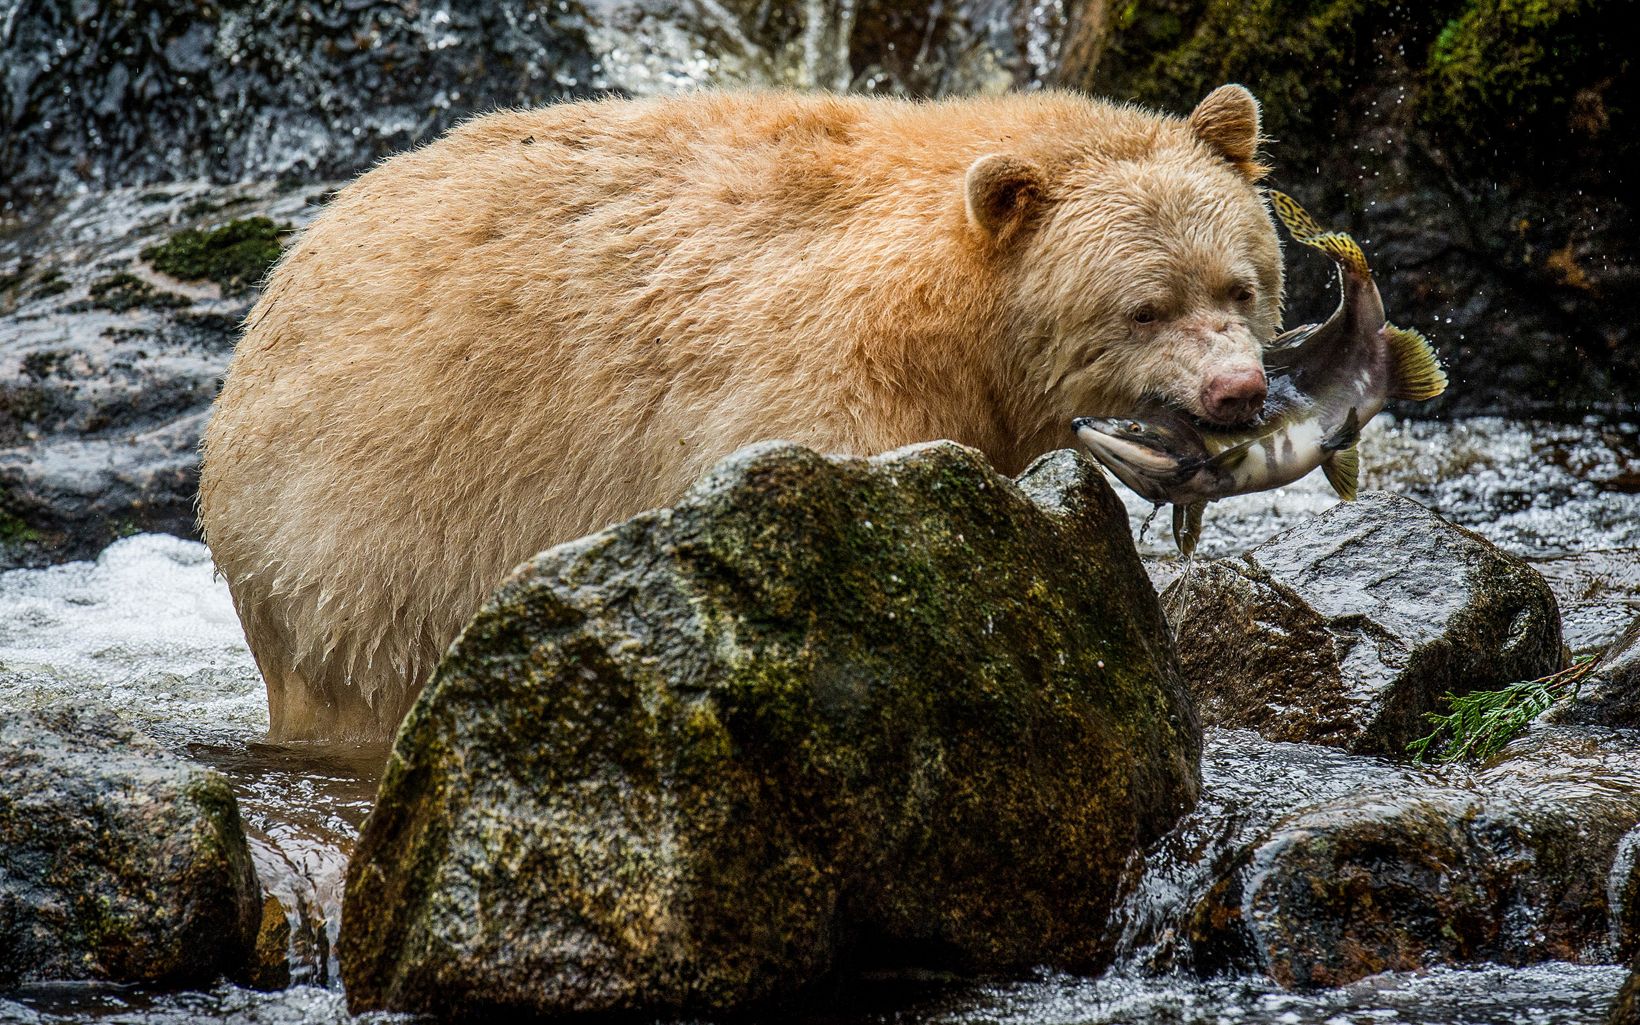 A Kermode bear or "Spirit Bear" Kermode Bear in the Great Bear Rainforest of Canada © John McCormack